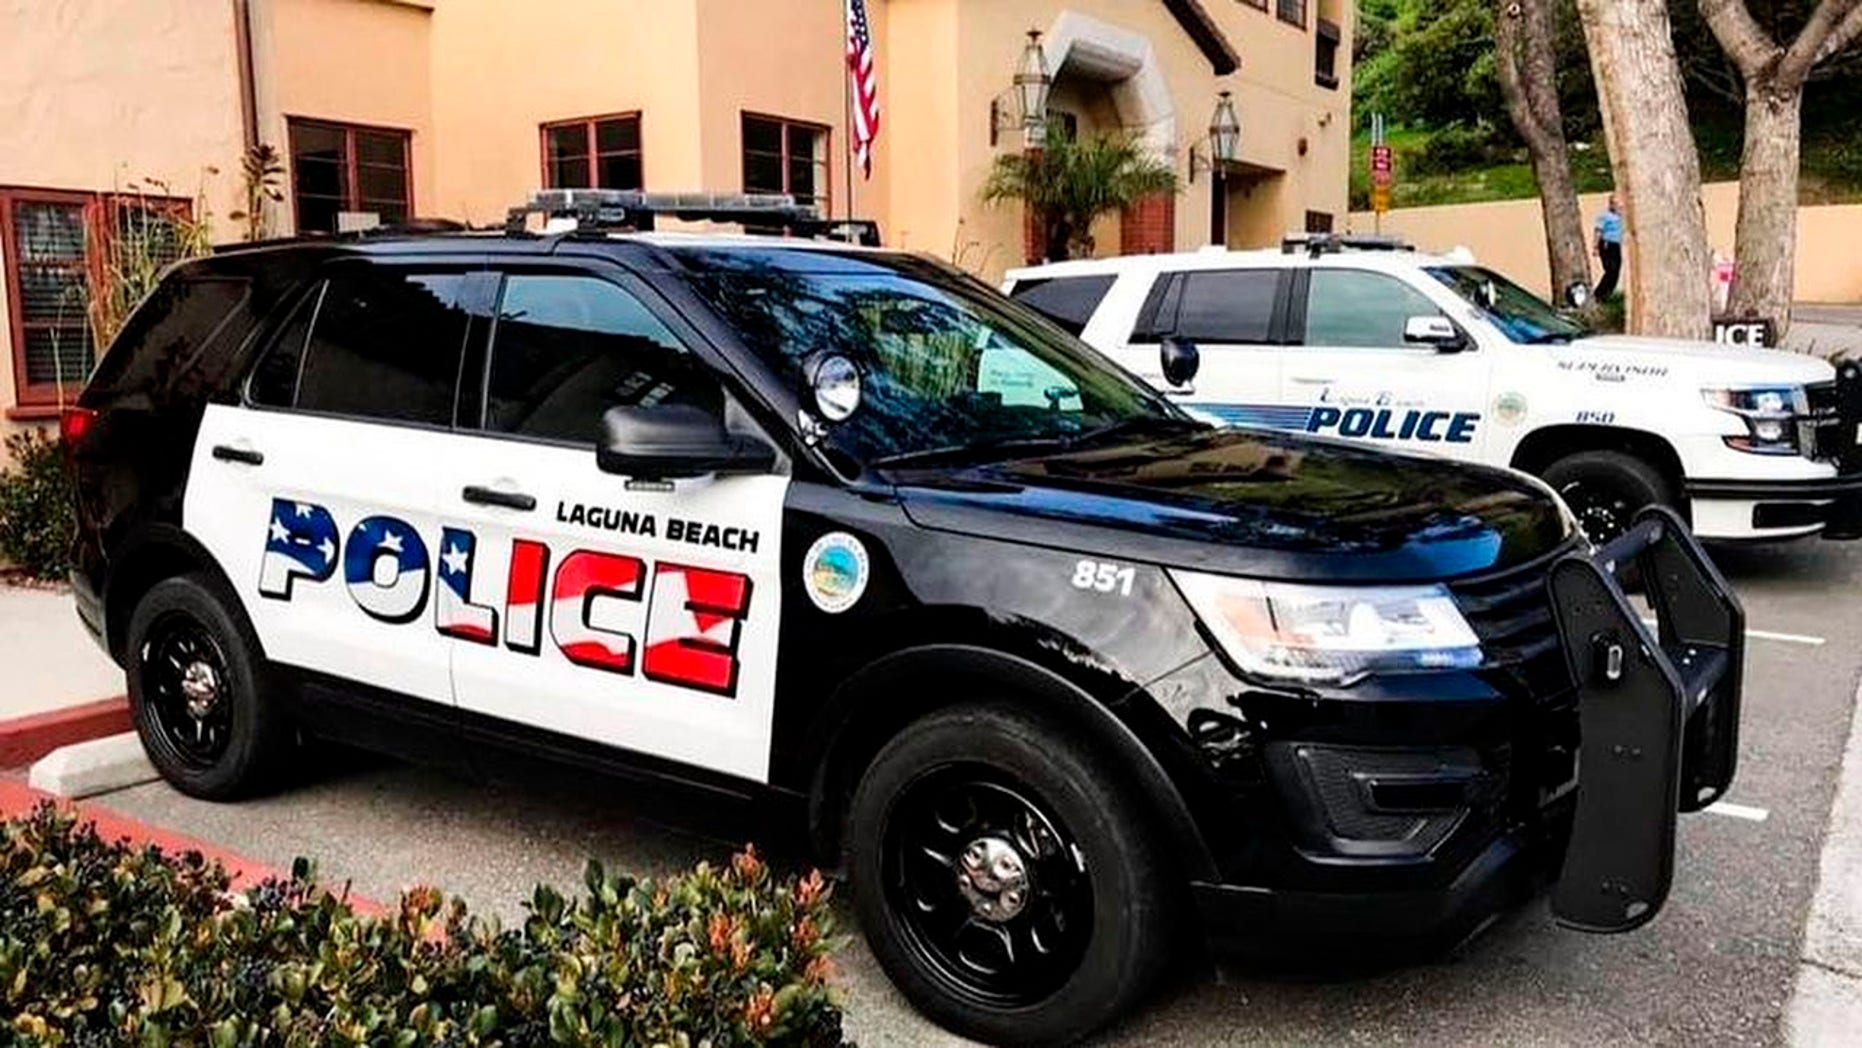 Patriotic Patrol Car Lettering Sparks Backlash In California City Fox